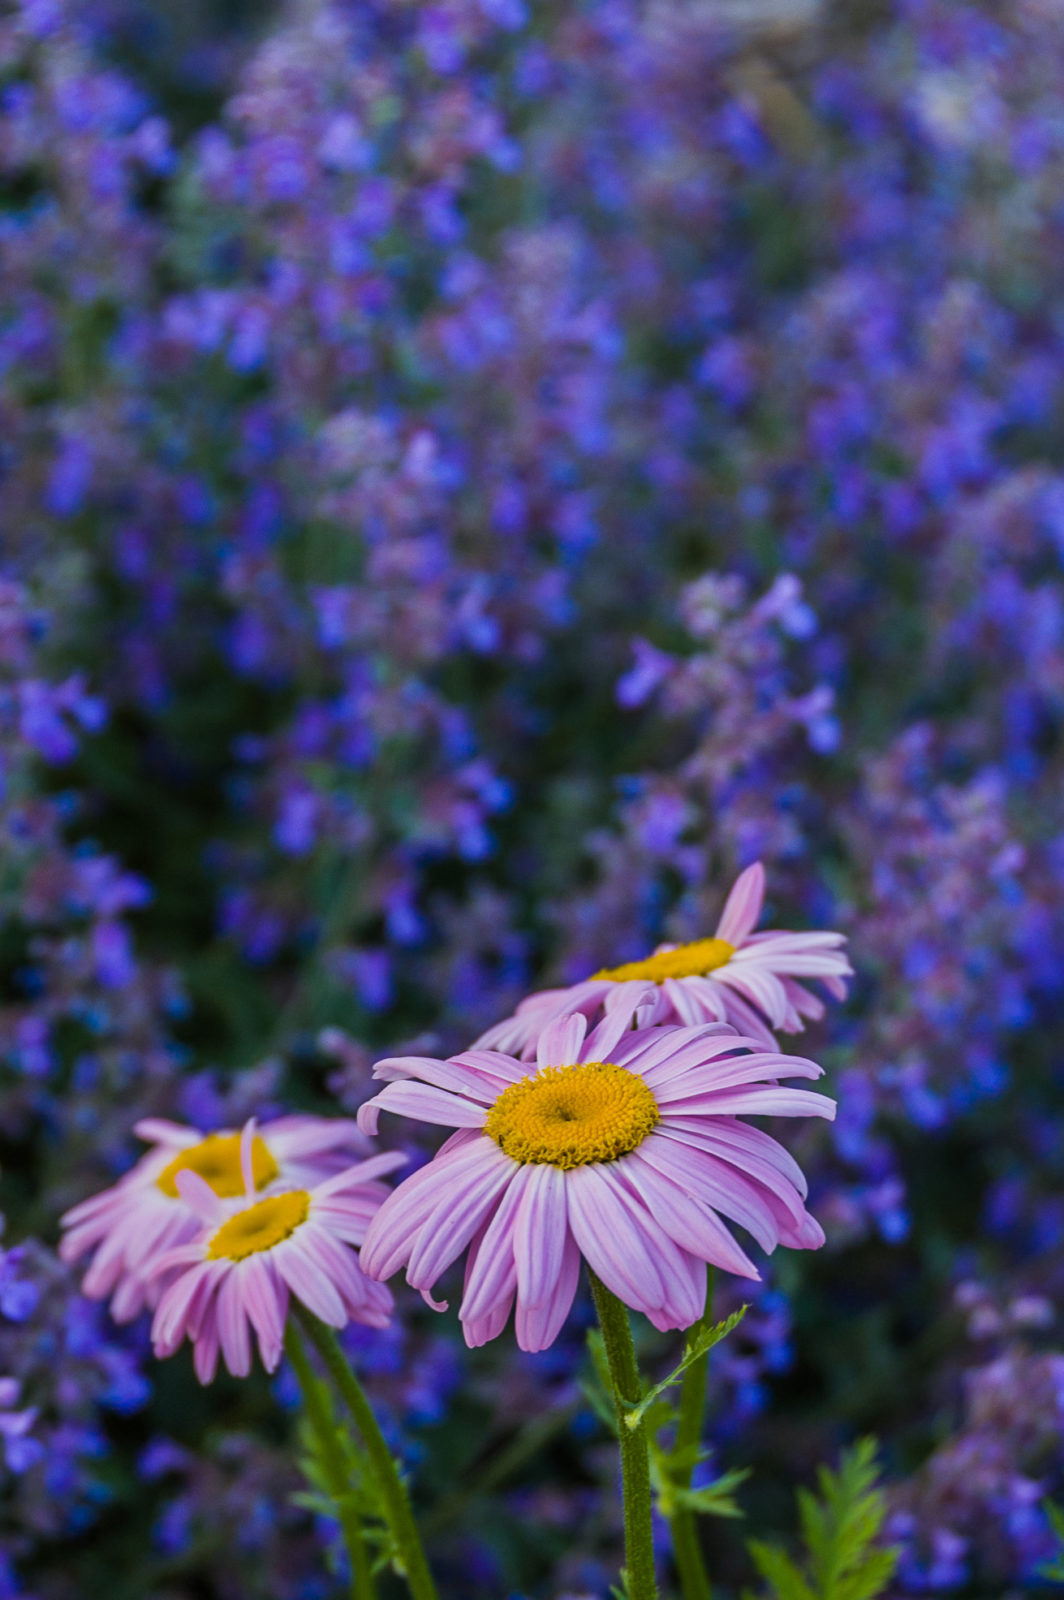 Purple daisies against a backdrop of deep purple flowers